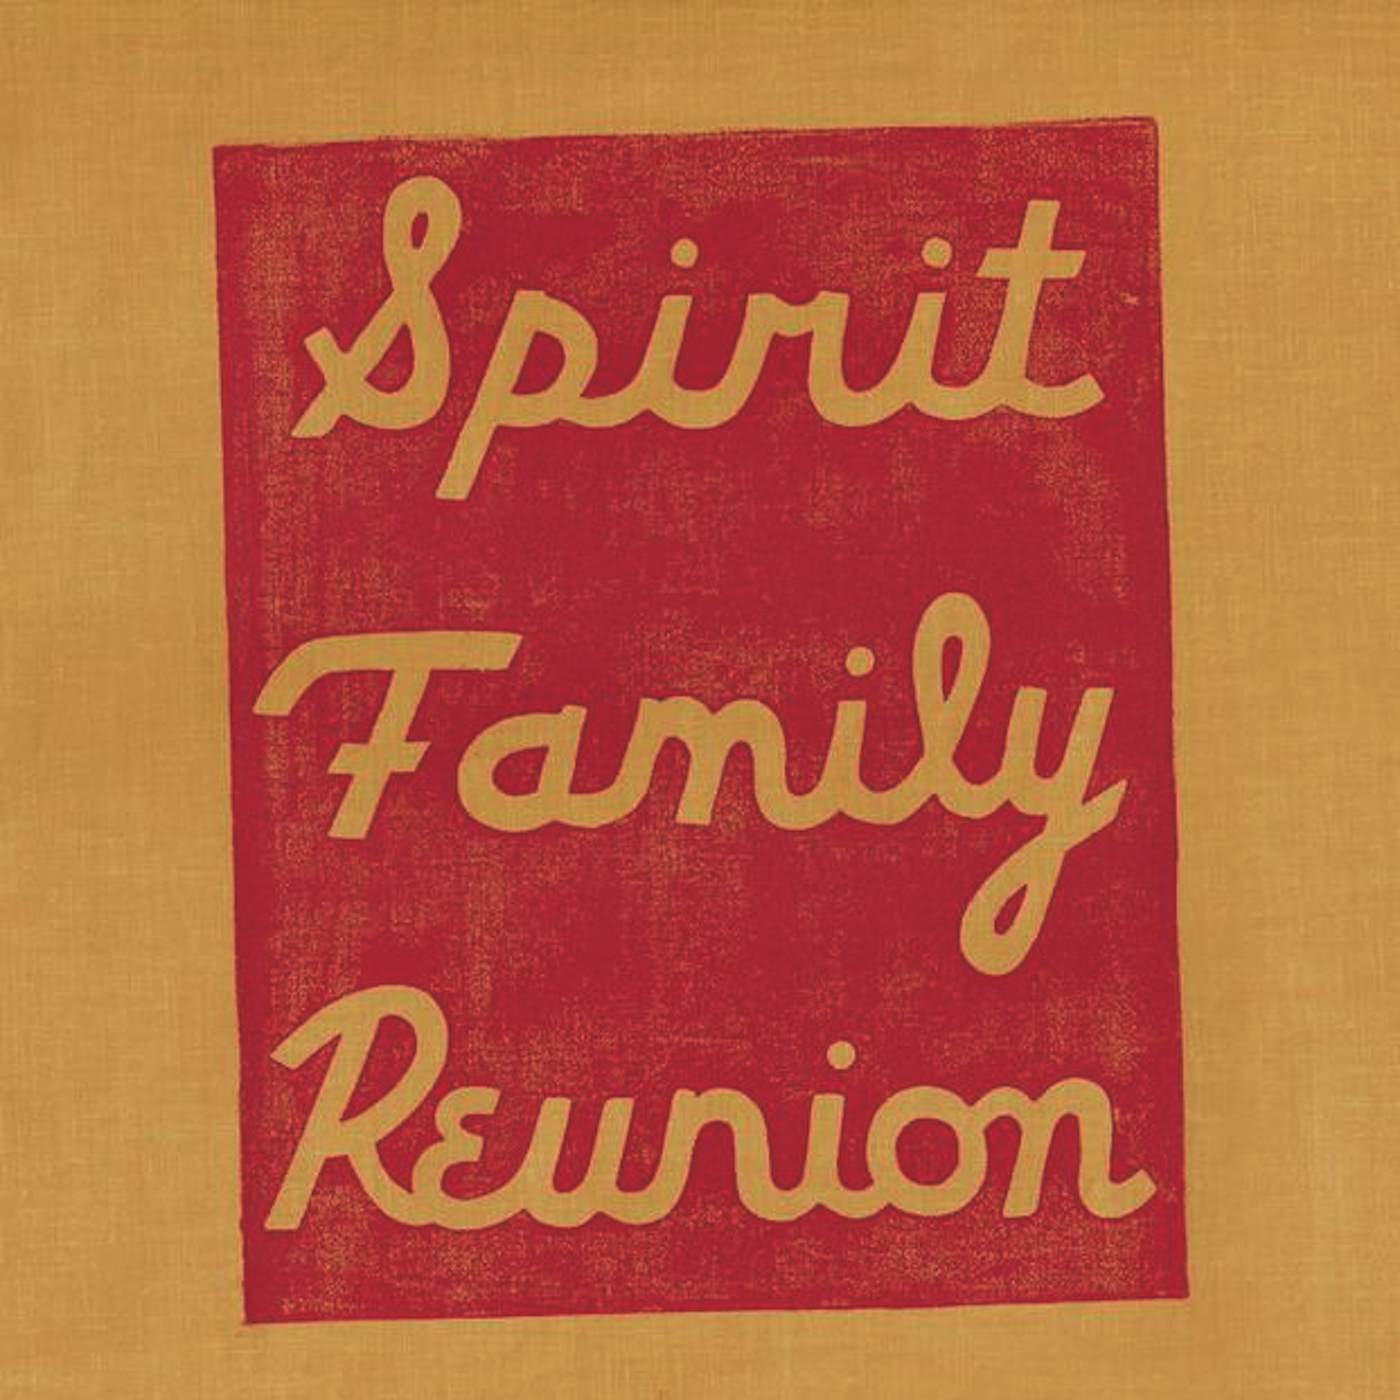 Spirit Family Reunion